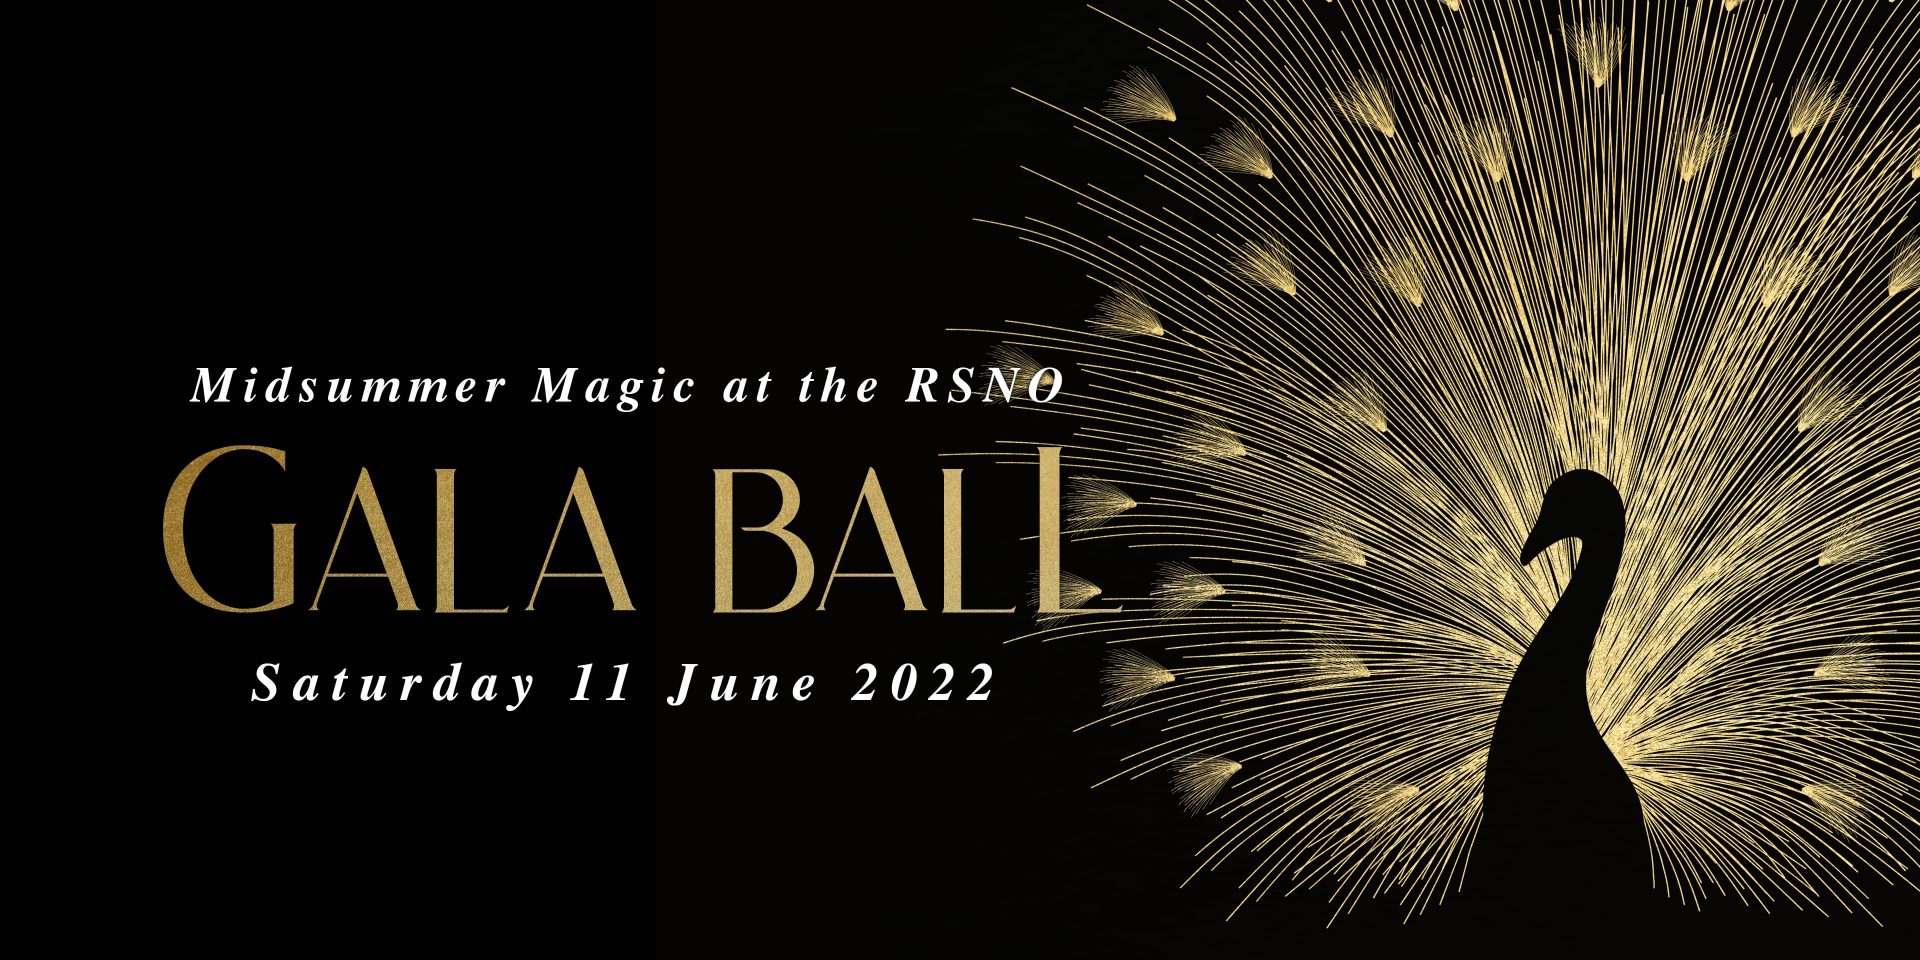 Midsummer Gala Ball with the RSNO